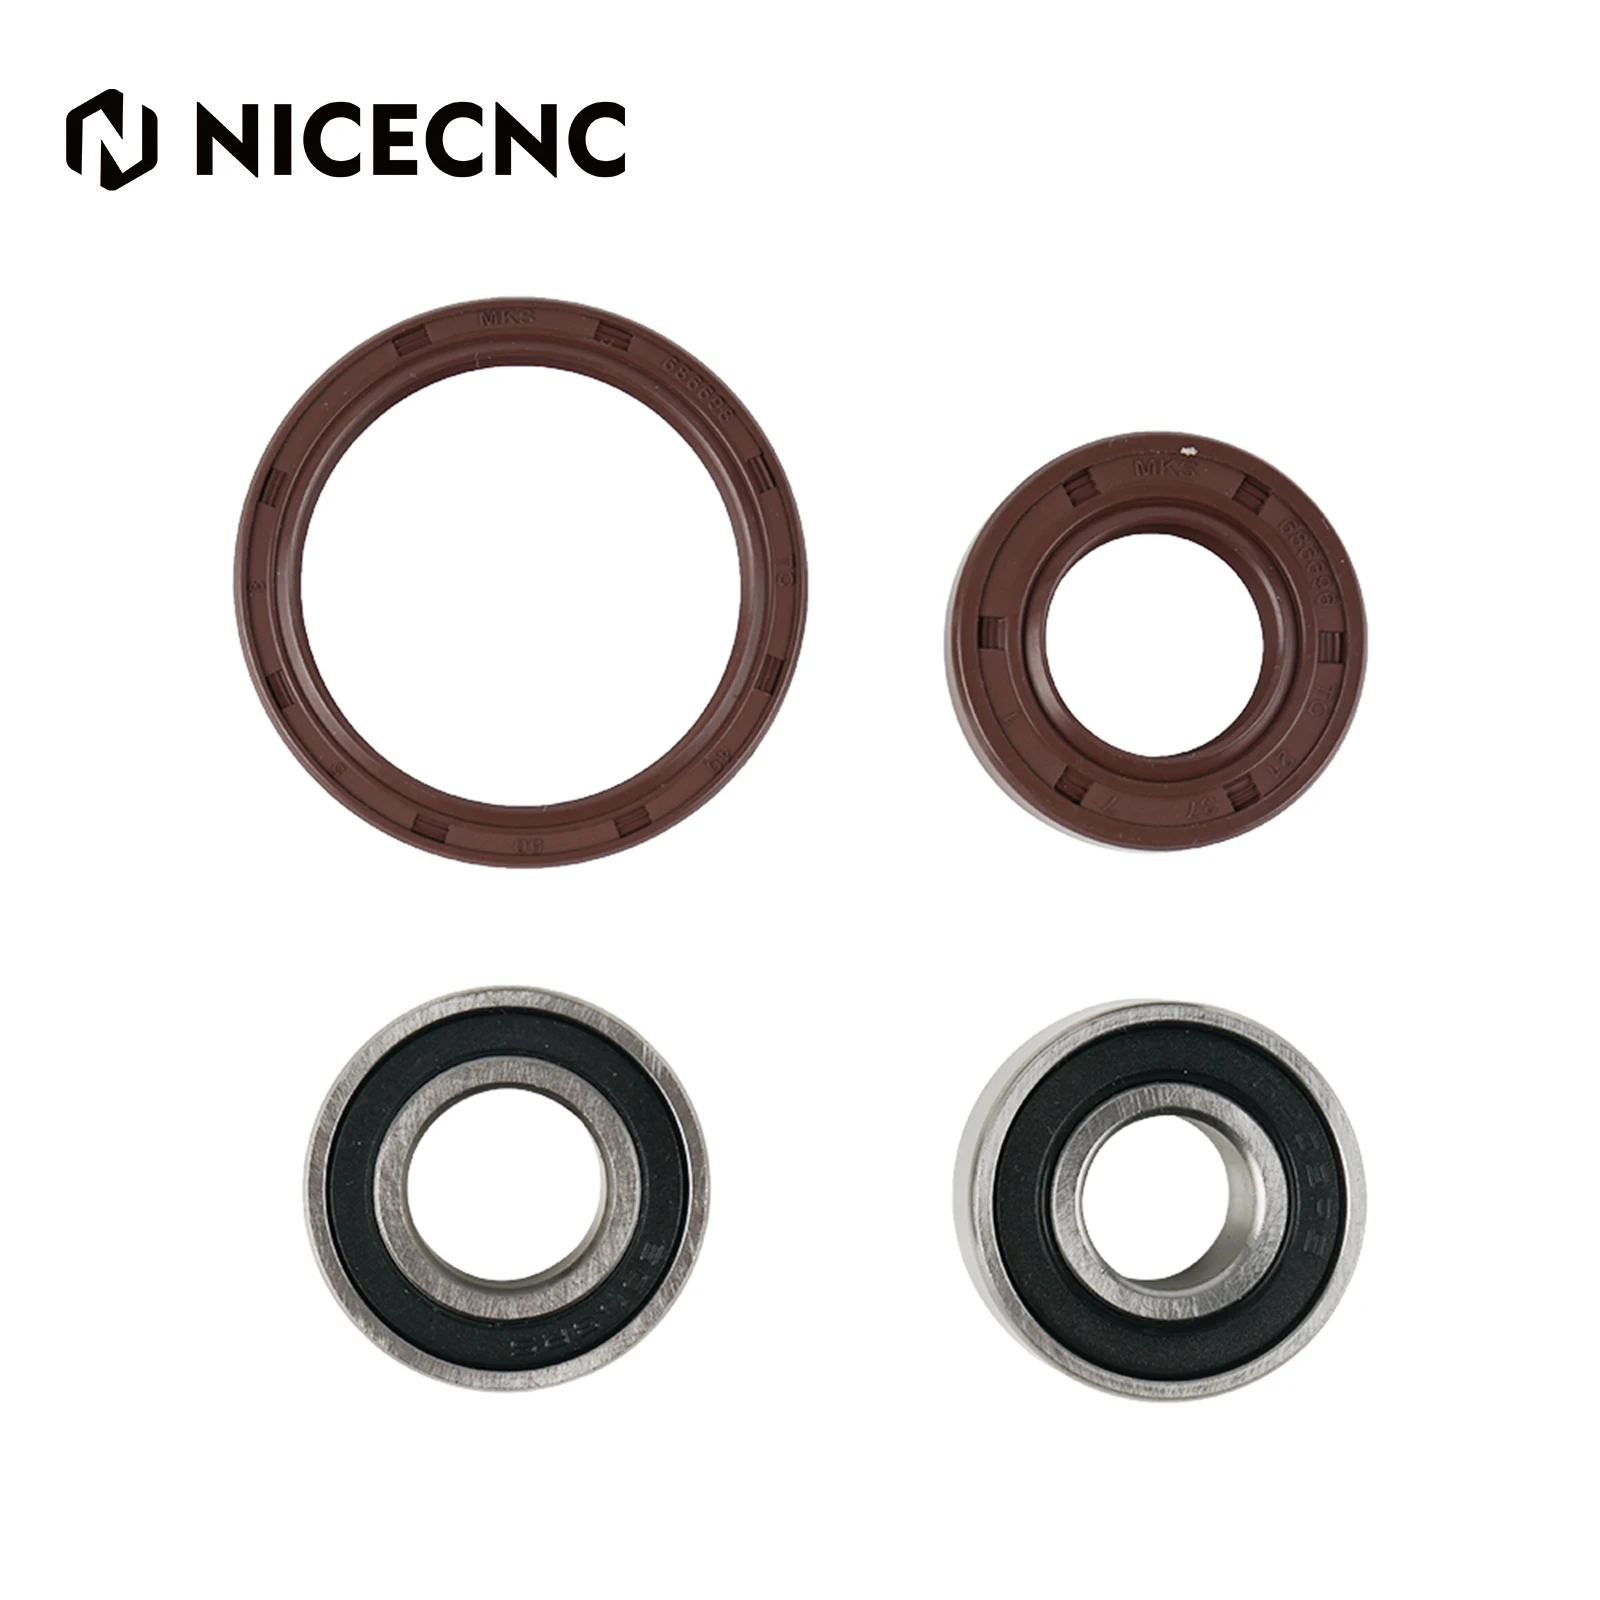 

NICECNC Rear Wheel Bearing Rubber Seals Kit For Honda CR125R CR250R CR 125R 250R 1990 1991 1992 1993 1994 Motorcycle Accessories